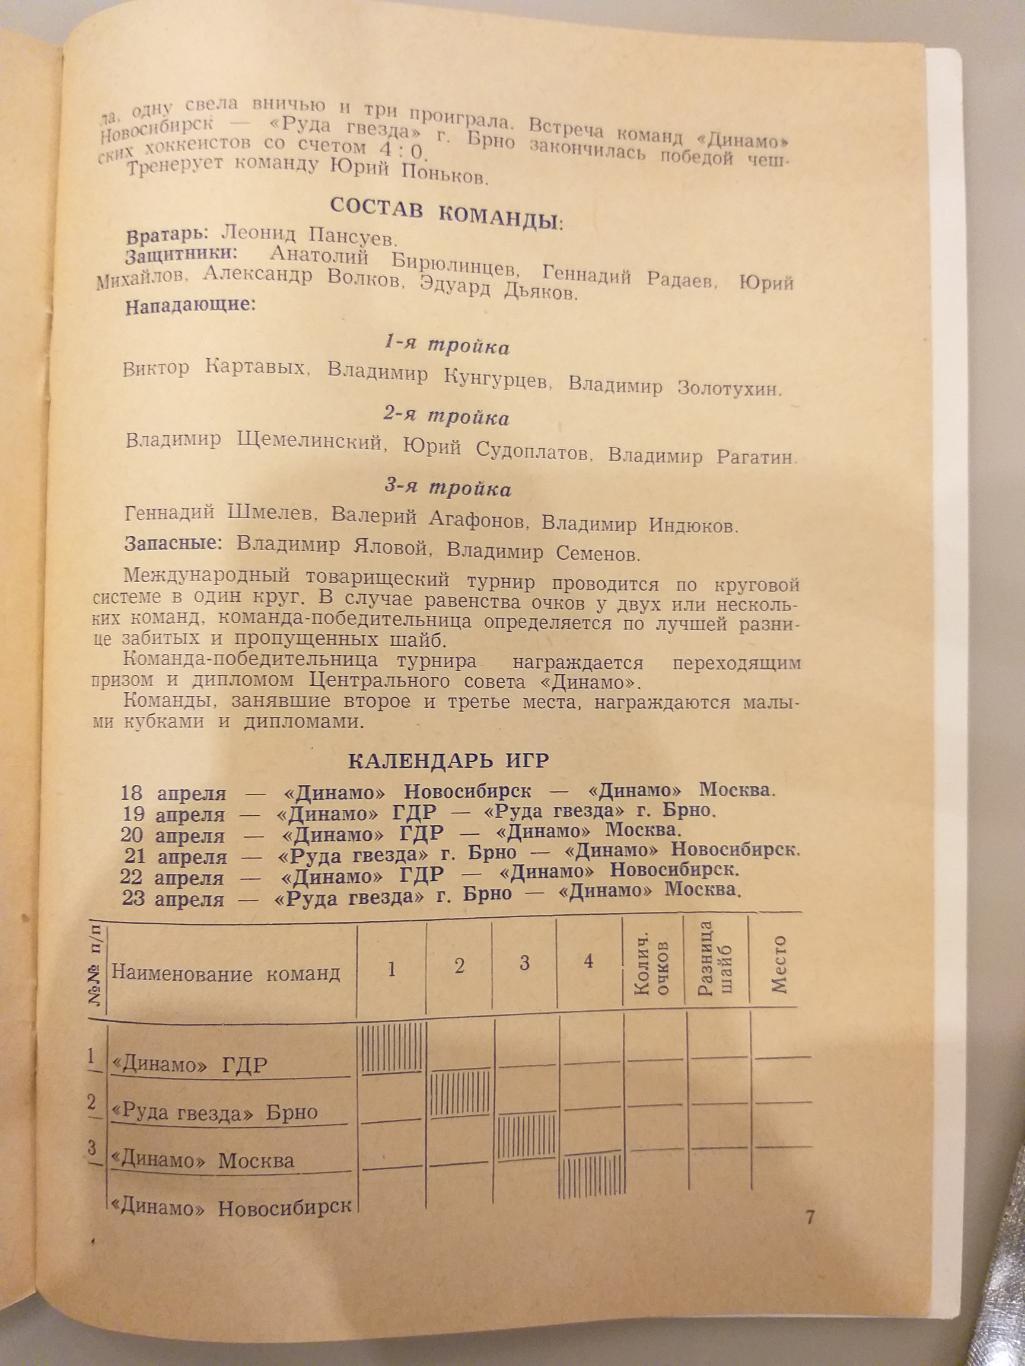 Турнир Киев 18-23.04.1962 Динамо(Москва),Динамо(Новоси бирск),Динамо(ГДР) 1